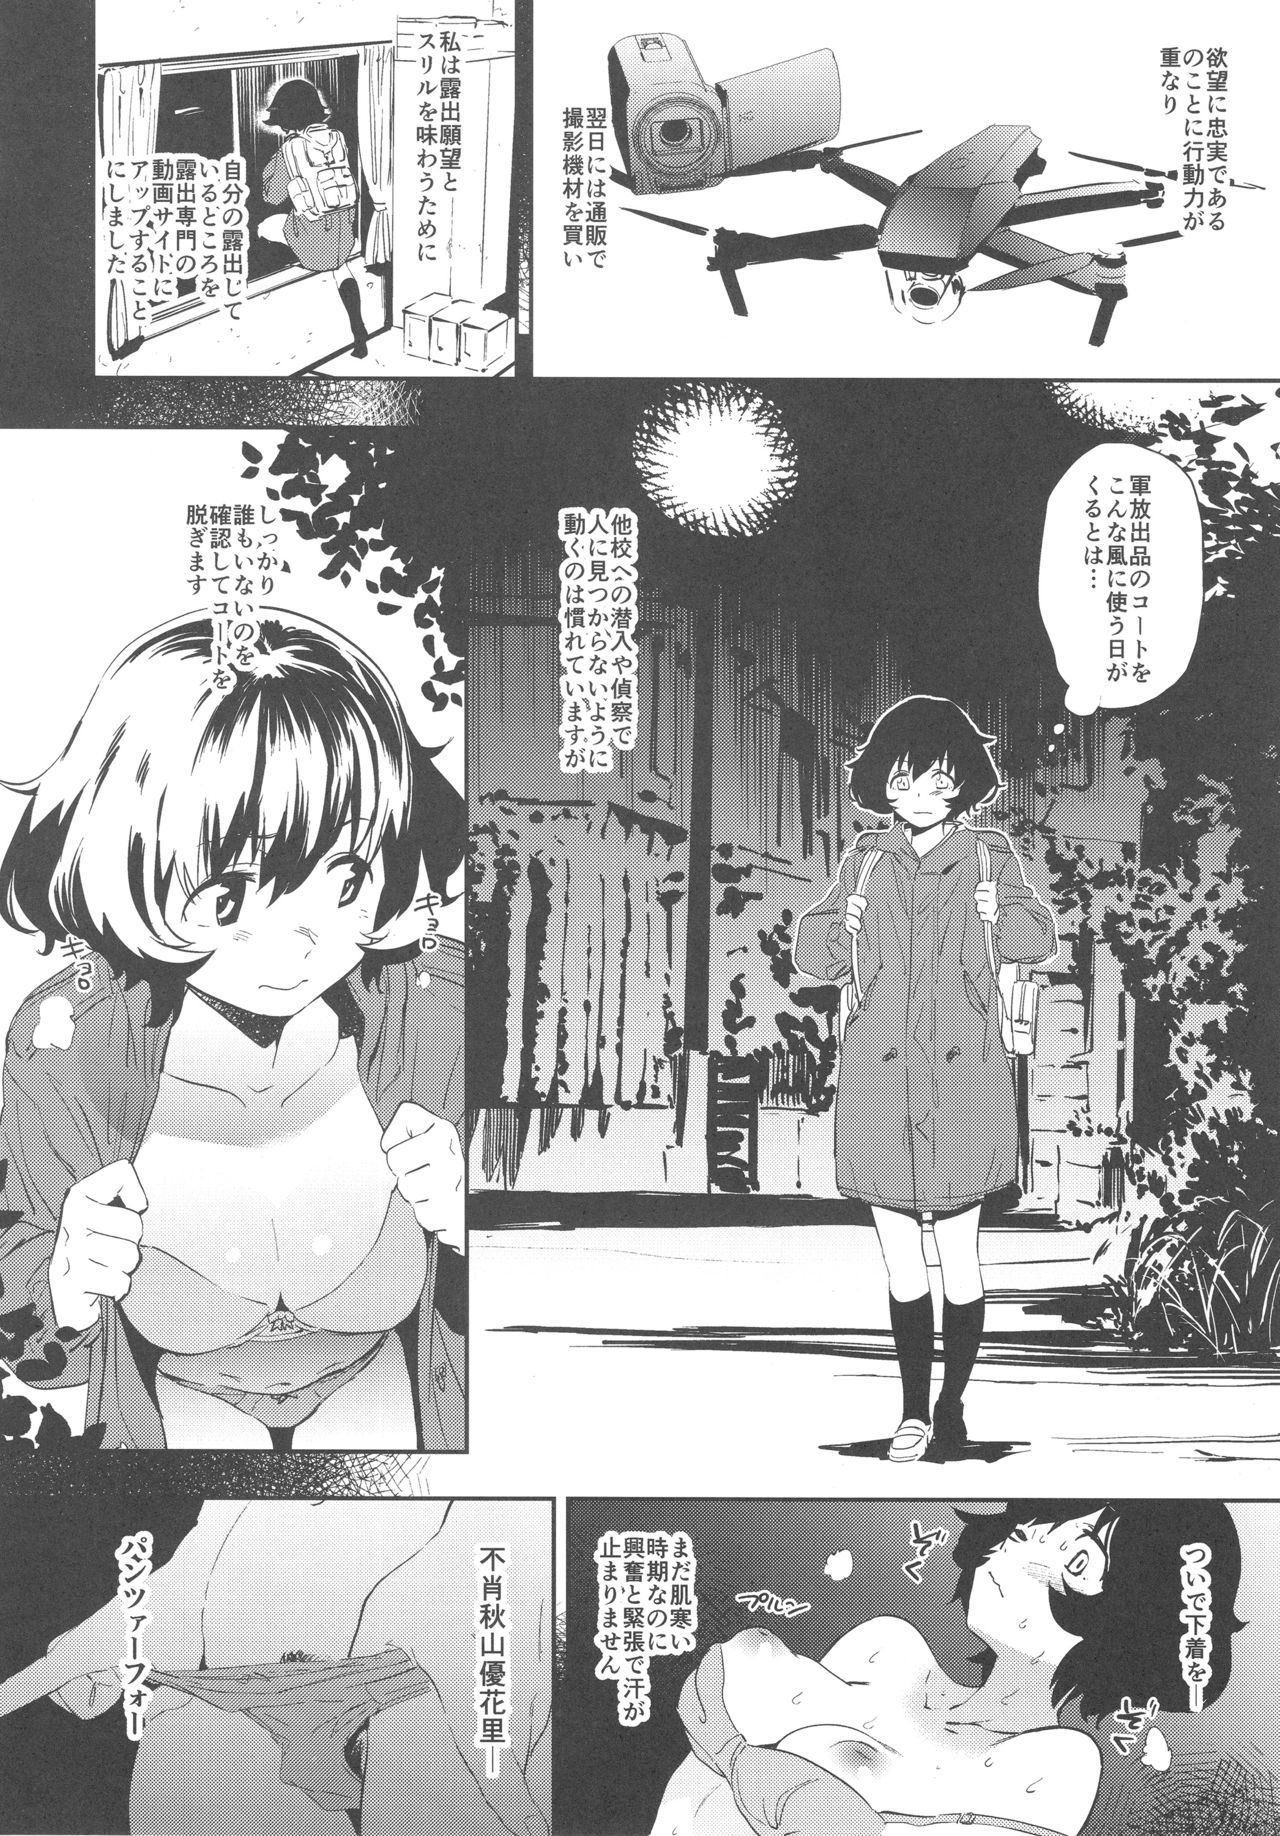 (C93) [Camrism (Kito Sakeru)] Private Akiyama (Girls und Panzer) (C93) [カムリズム (鬼頭サケル)] プライベート・アキヤマ (ガールズ&パンツァー)